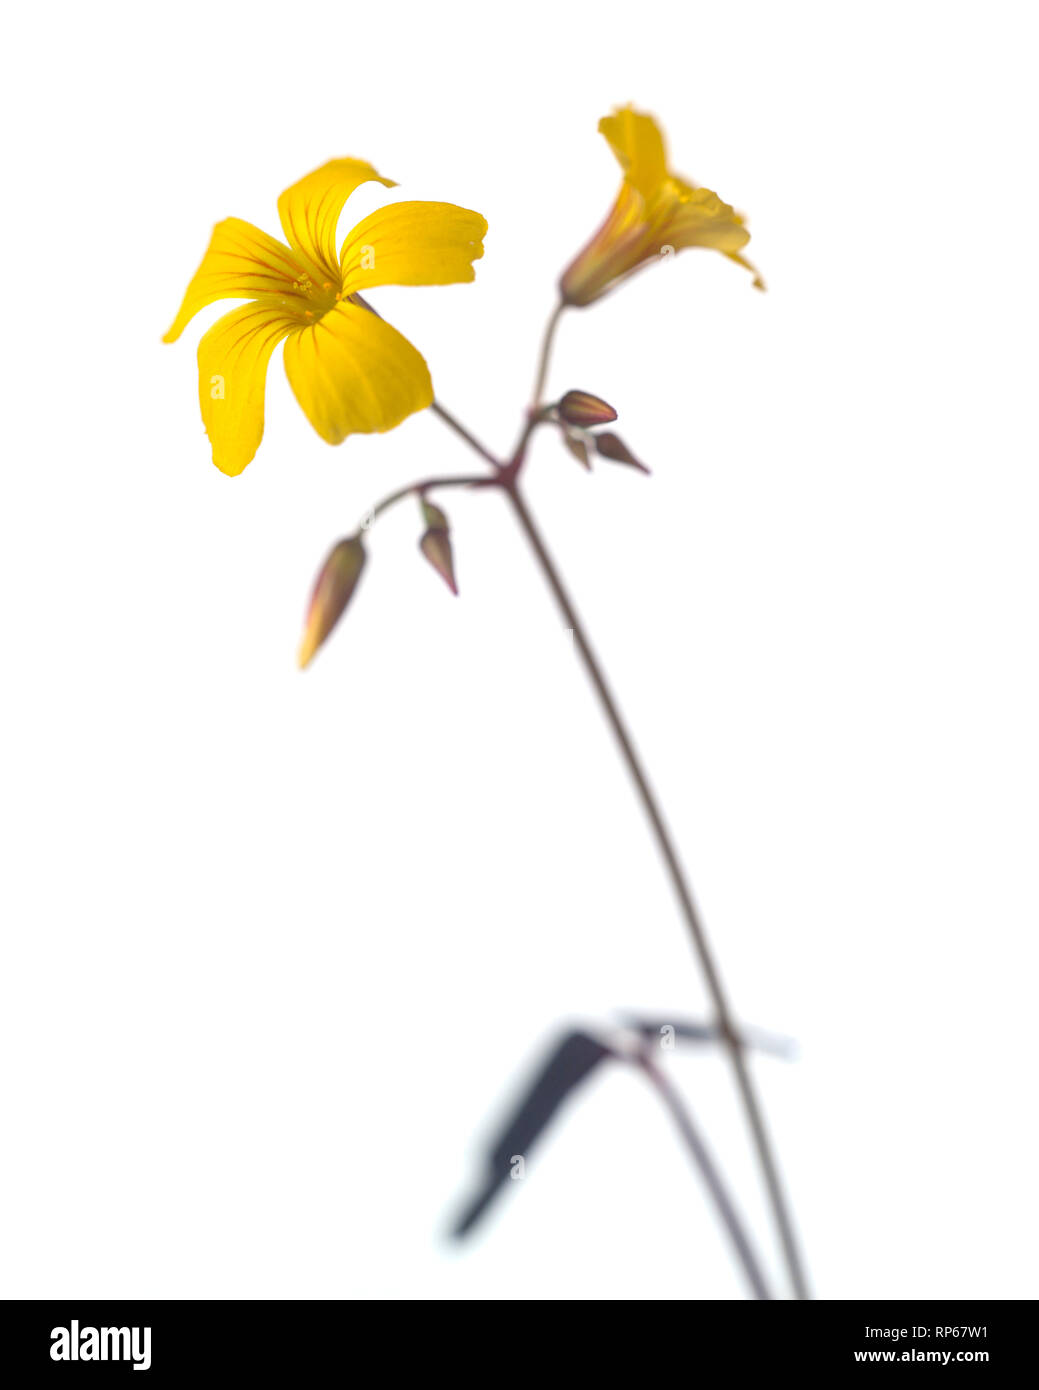 Yellow Flower against White Background Stock Photo